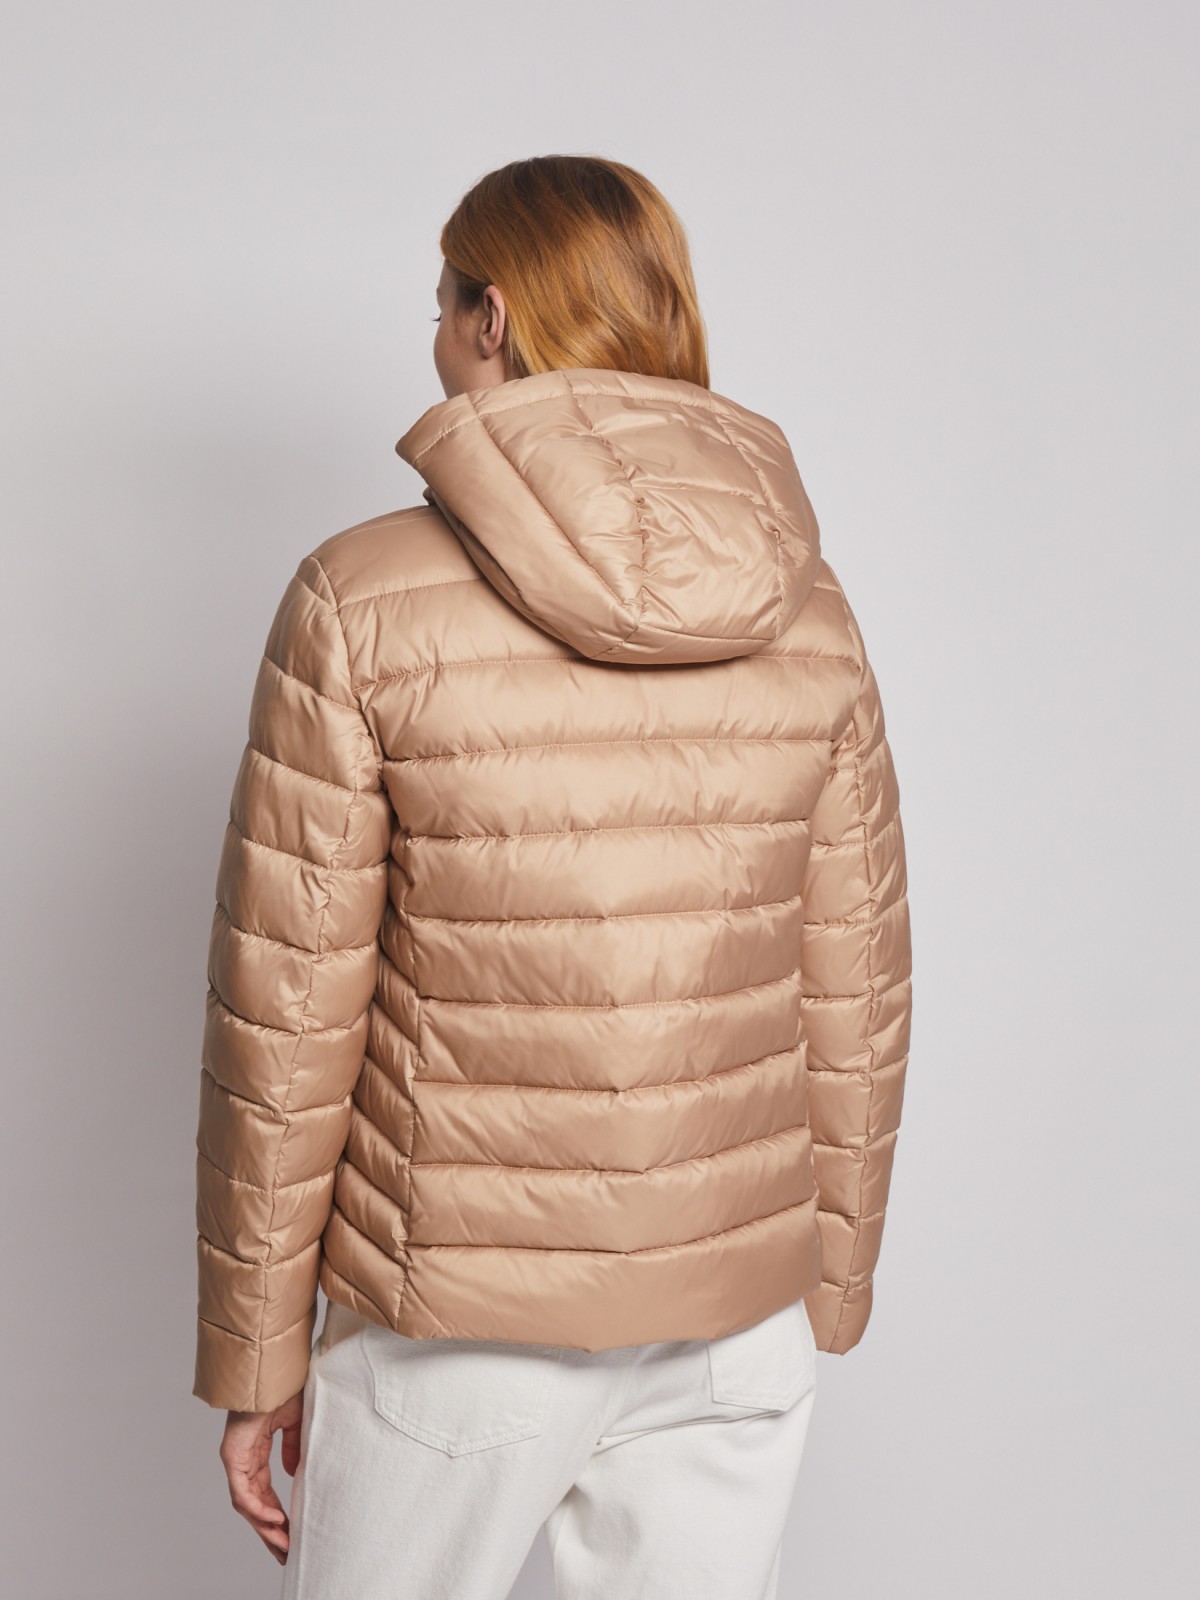 Утеплённая стёганая куртка с капюшоном zolla 023125112274, цвет бежевый, размер S - фото 5